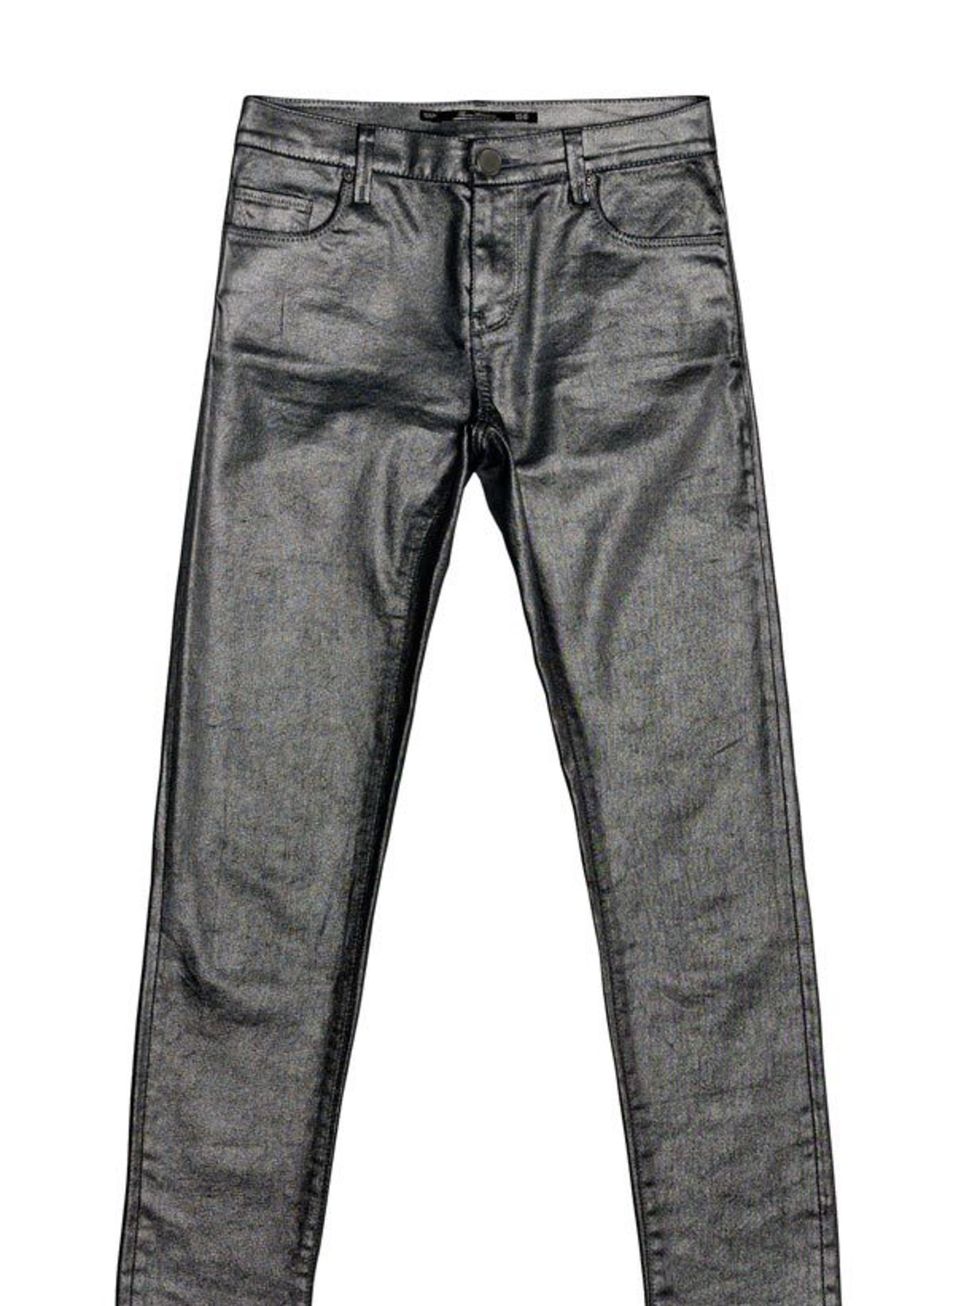 <p><a href="http://www.zara.com/webapp/wcs/stores/servlet/product/uk/en/zara-W2011/122013/387542/METALLIC%2BTROUSERS">Zara</a> metallic trousers, £39.99</p>